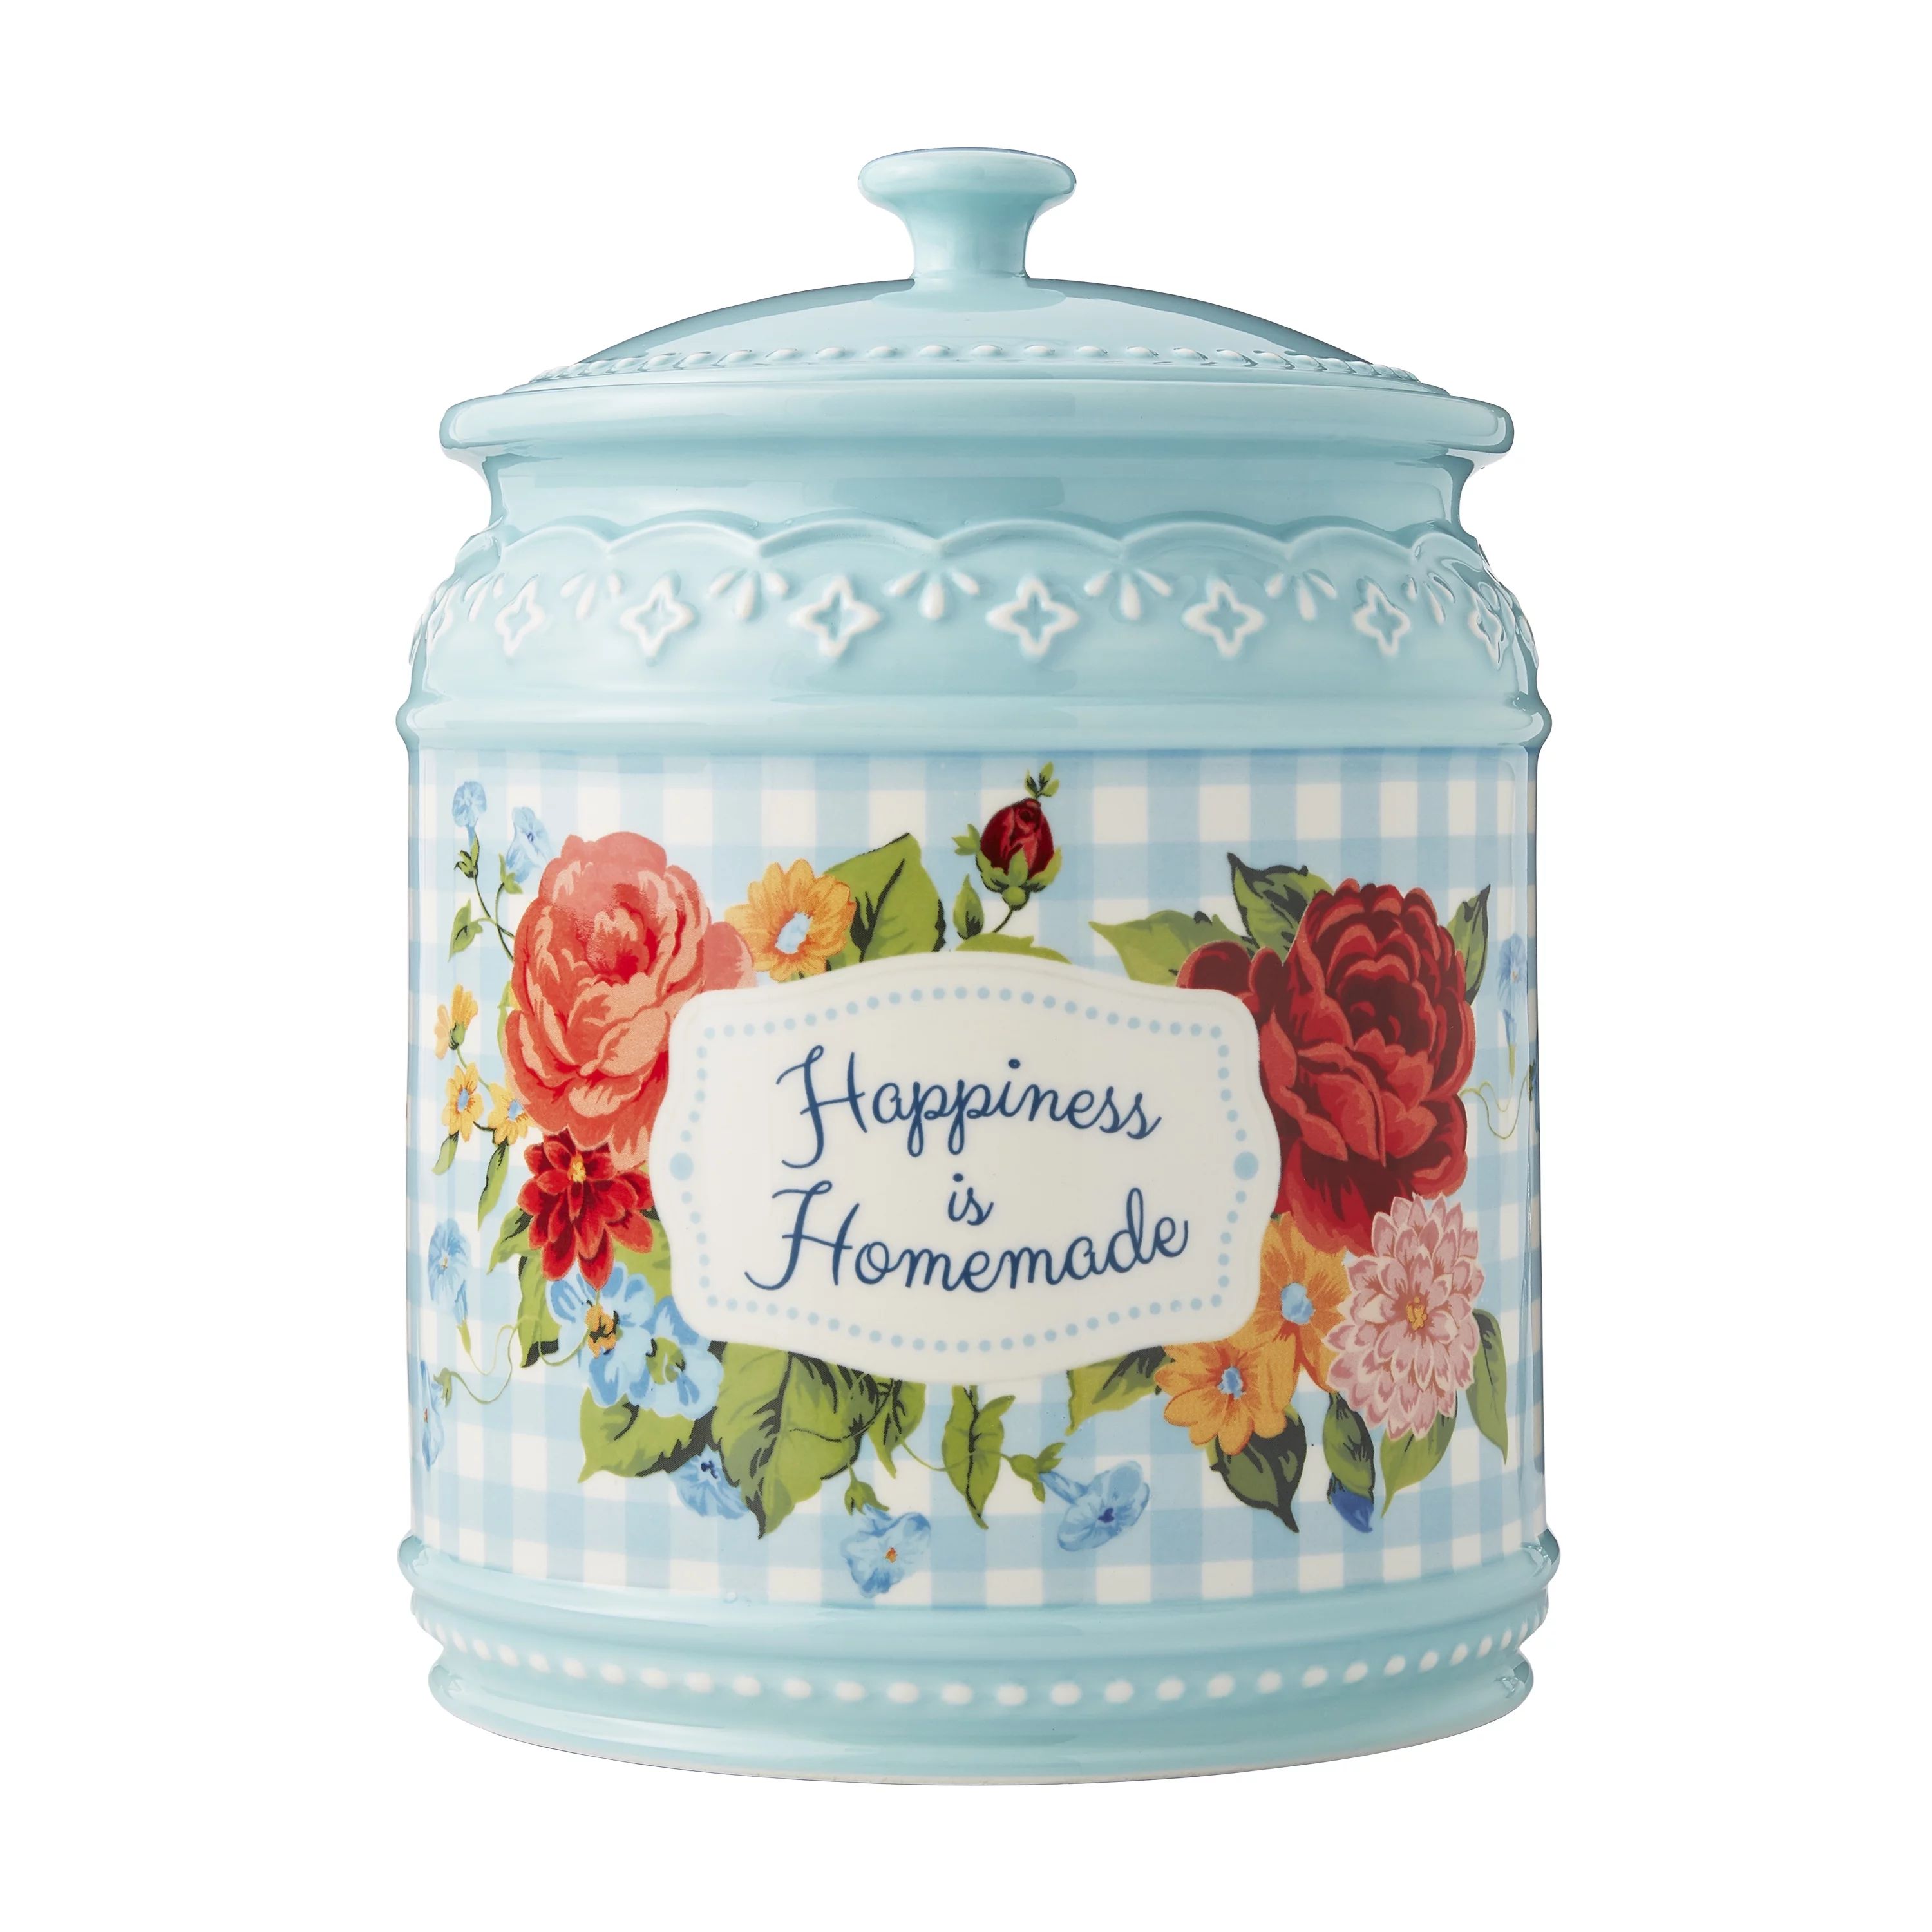 The Pioneer Woman Happiness Is Homemade Stoneware Cookie Jar | Walmart (US)